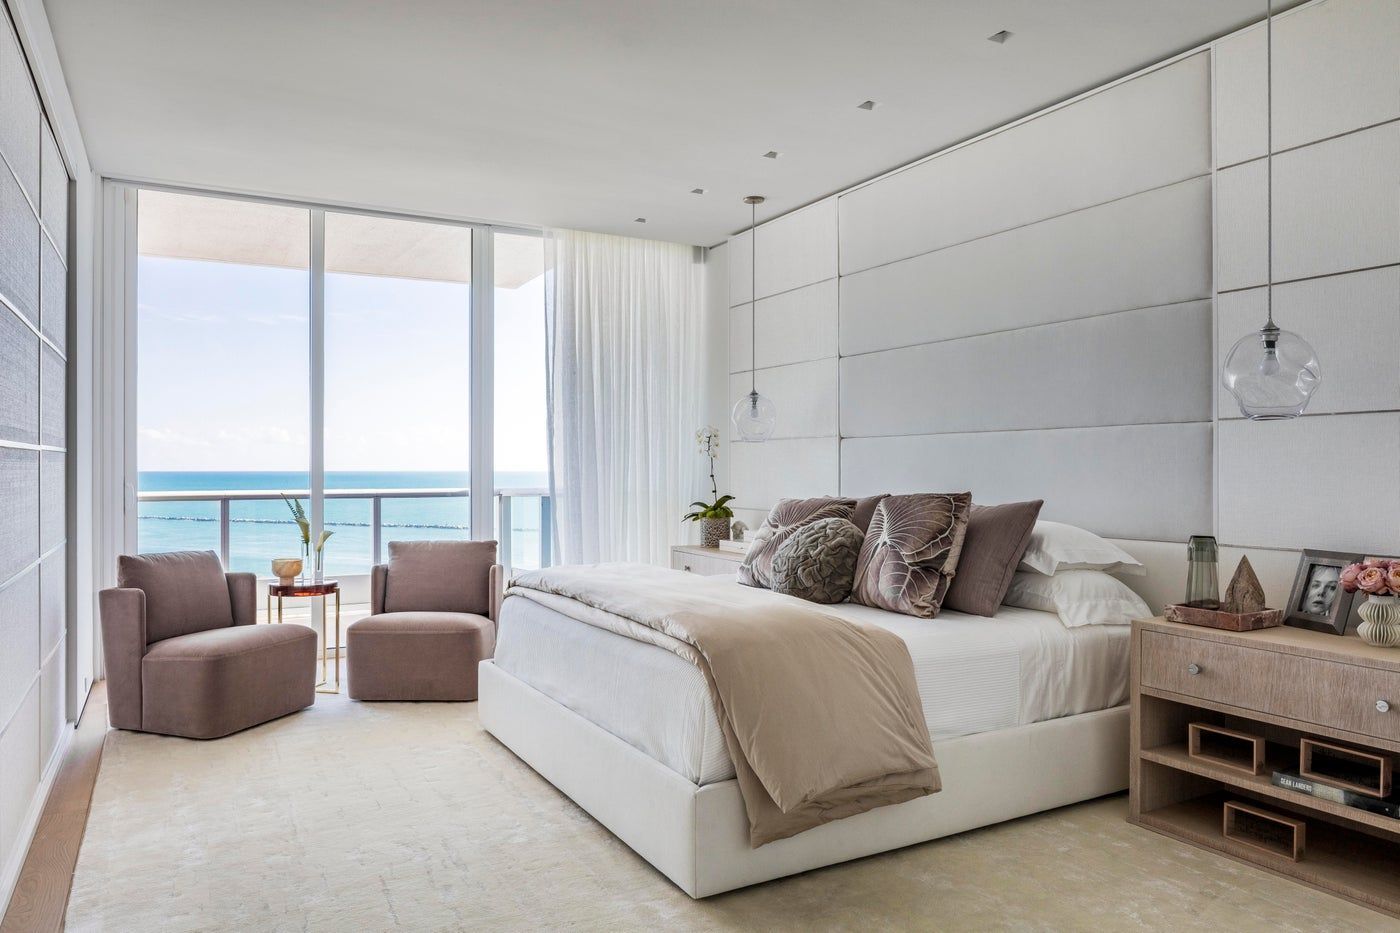 Minimalist Bedroom Decor Ideas – Bedroom Interior Design Minimalist in 2022